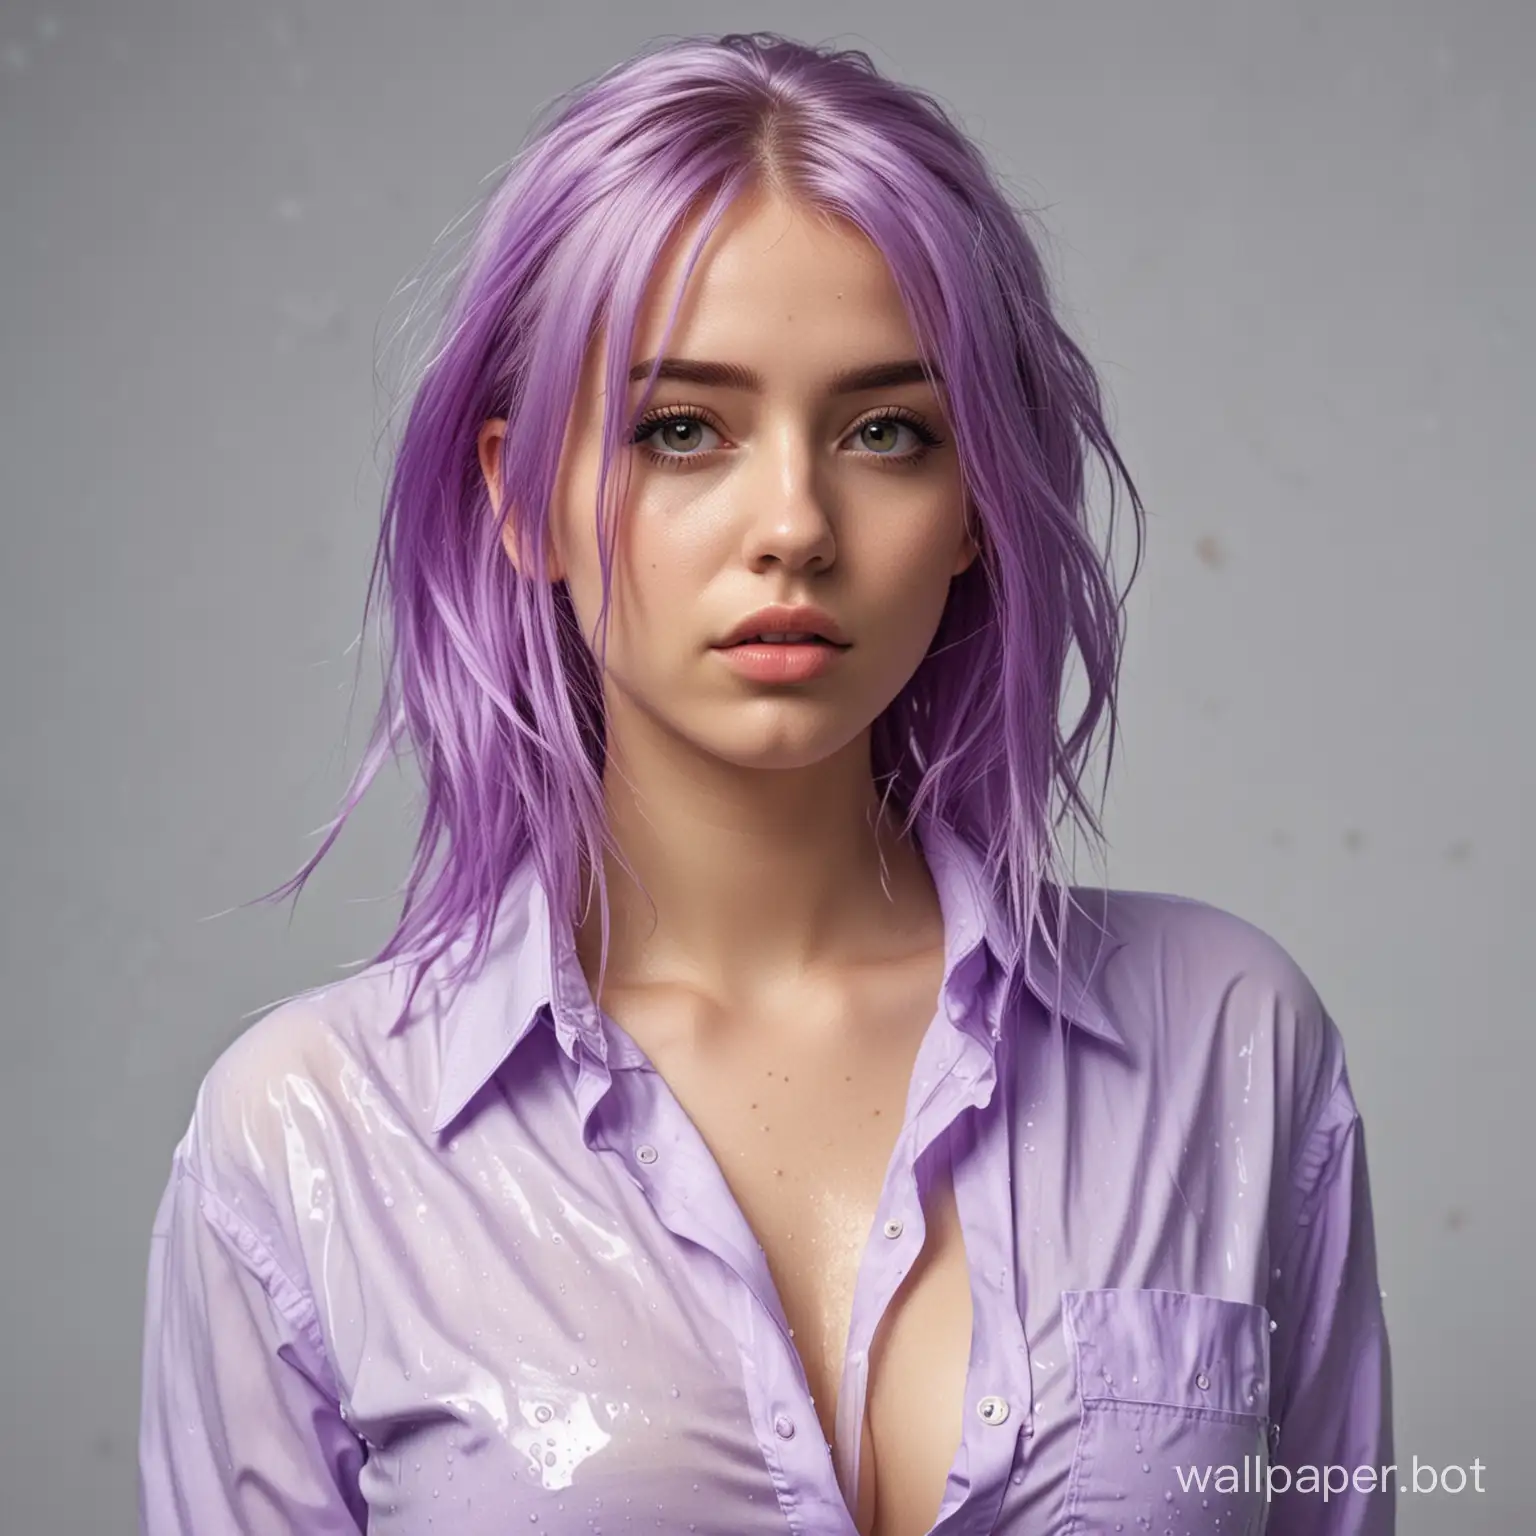 Wethaired-Girl-in-Vivid-Violet-Shirt